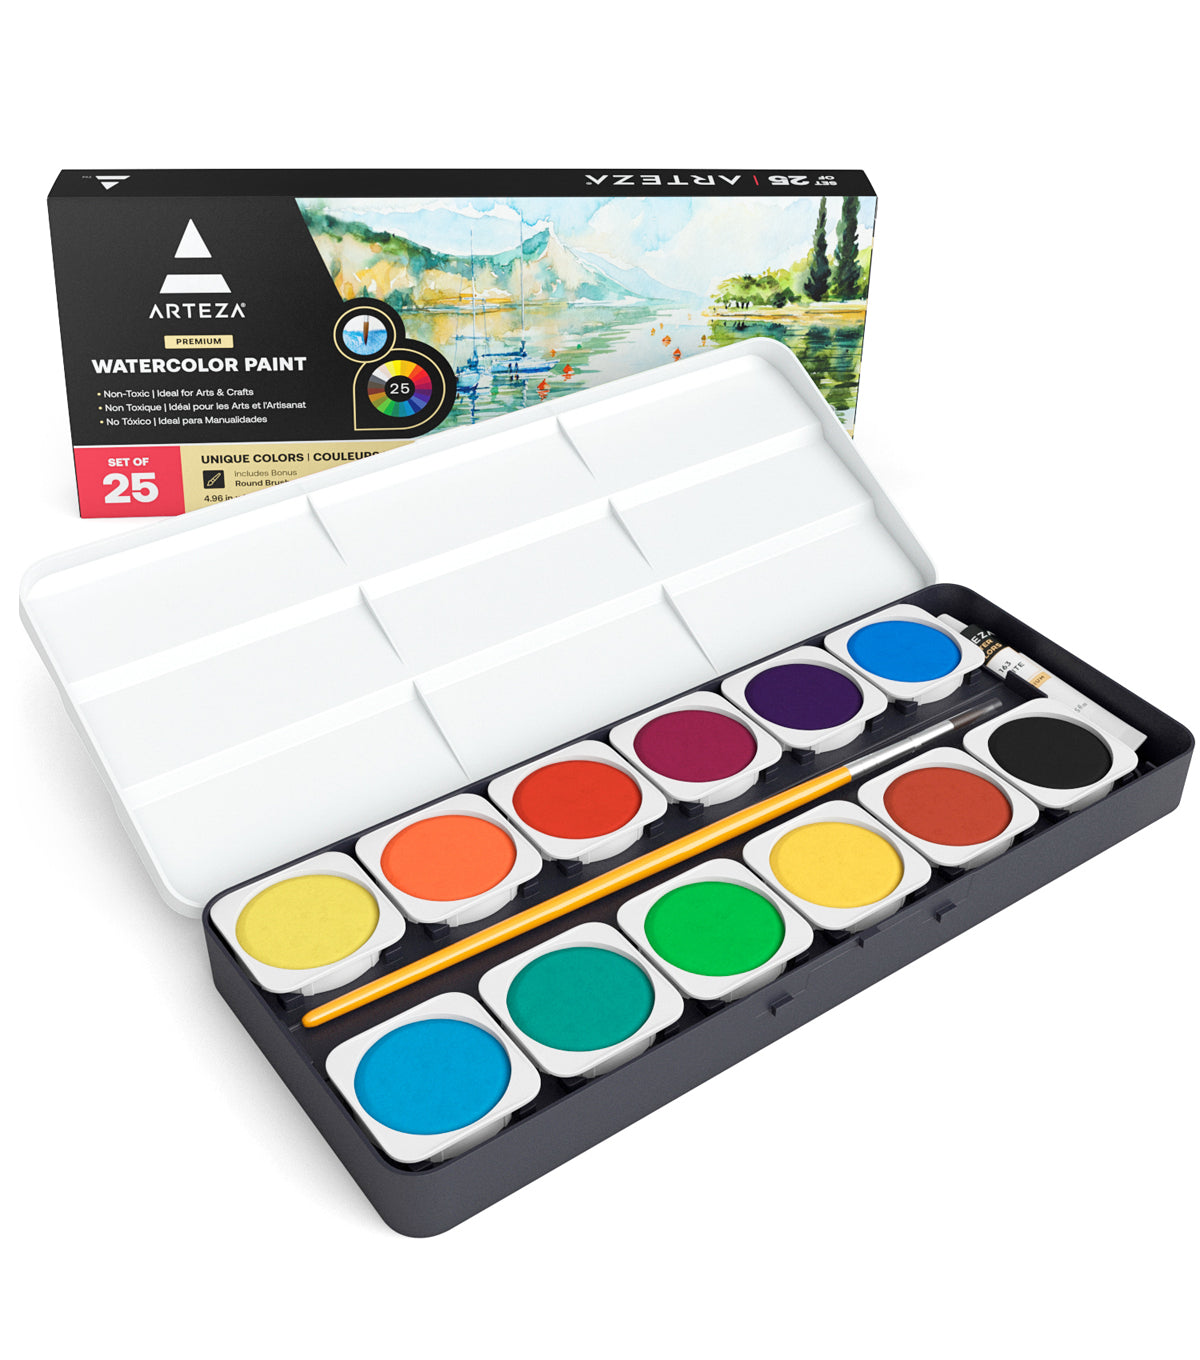  ARTEZA Watercolor Paint Set, 24 Colors in 12 ml/0.4 US fl oz  Tubes, Premium Non Toxic Water Colors Paint for Adults, Artists & Hobby  Painters, Bright Vibrant Watercolor Paints